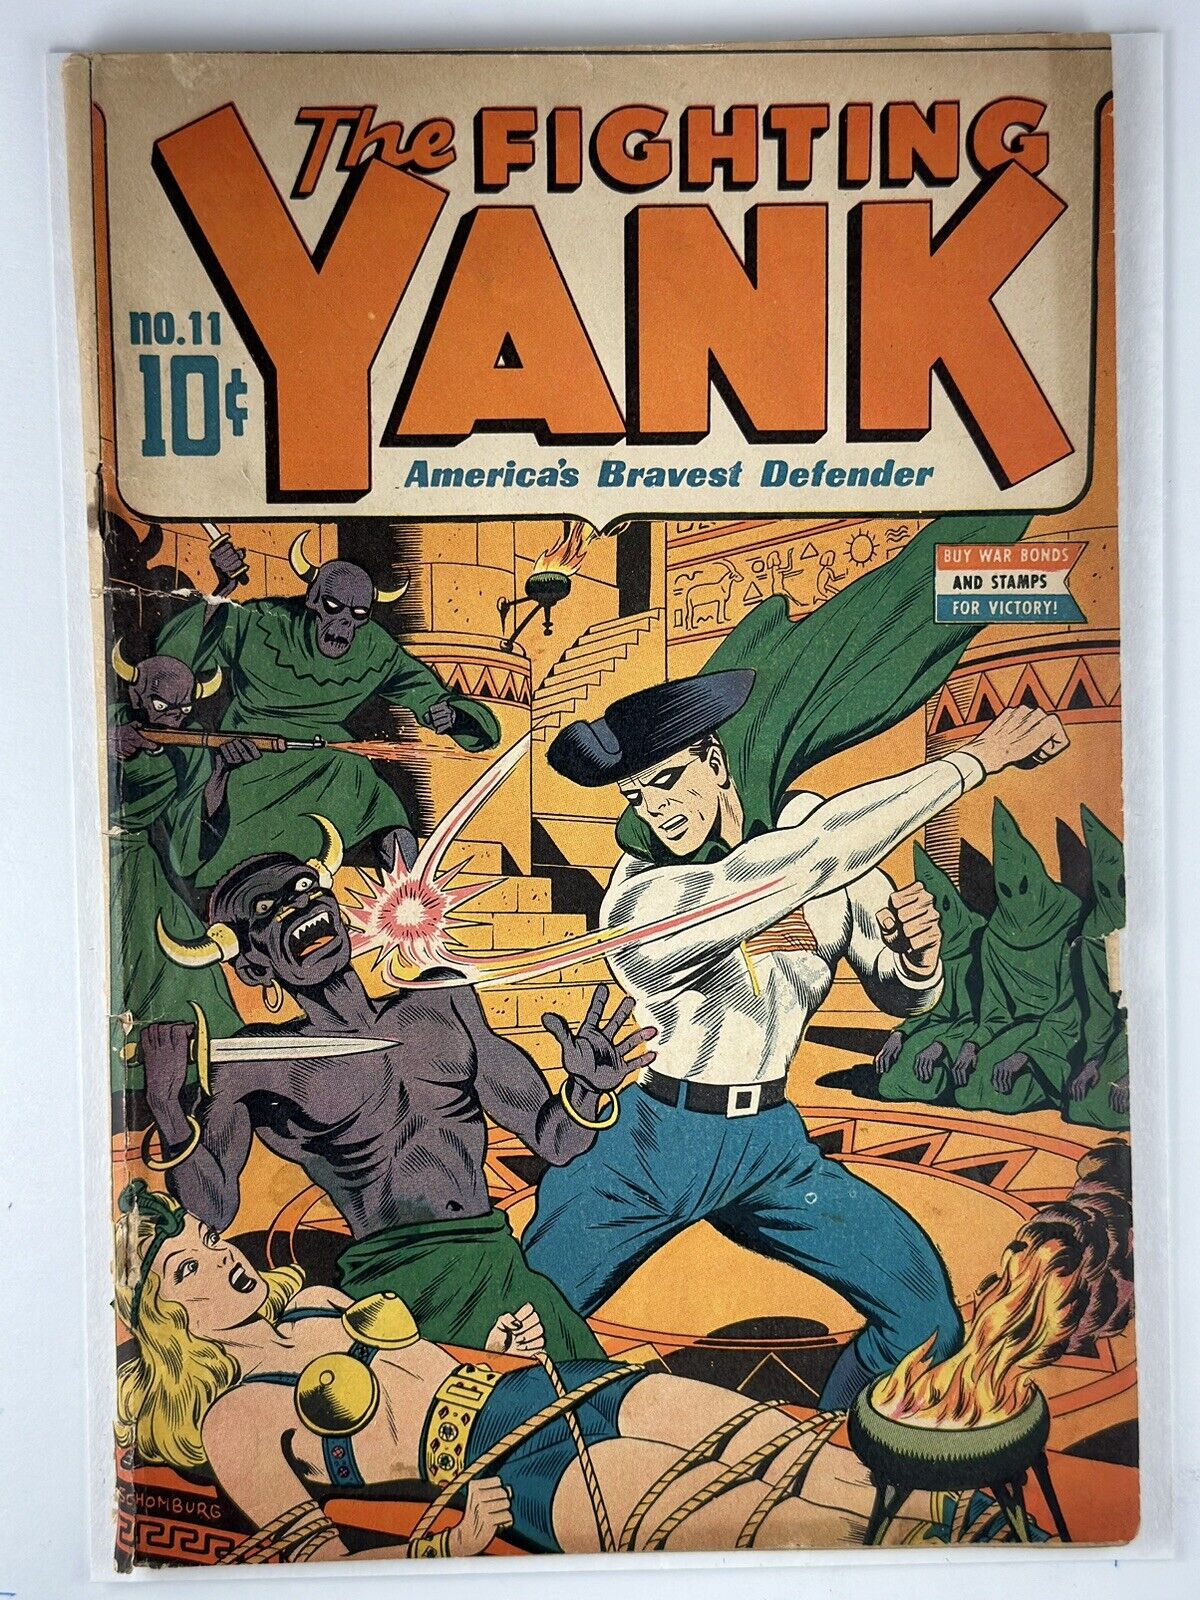 Fighting Yank #11 1945  (GD/VG) Schomburg art - Bondage cover, Hitler appearance